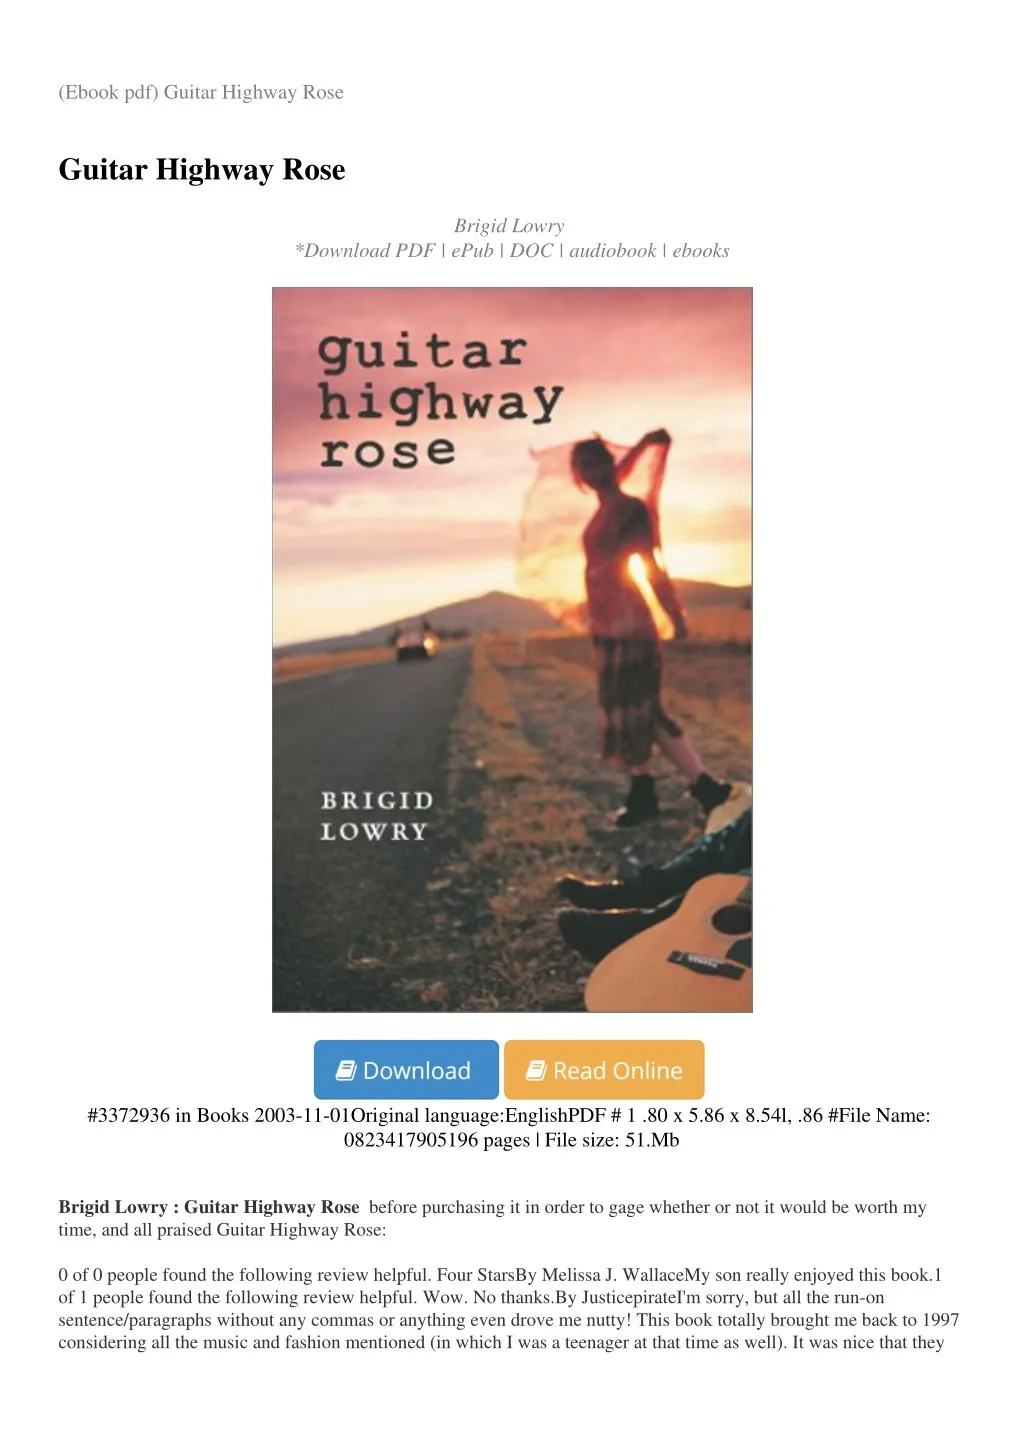 ebook pdf guitar highway rose